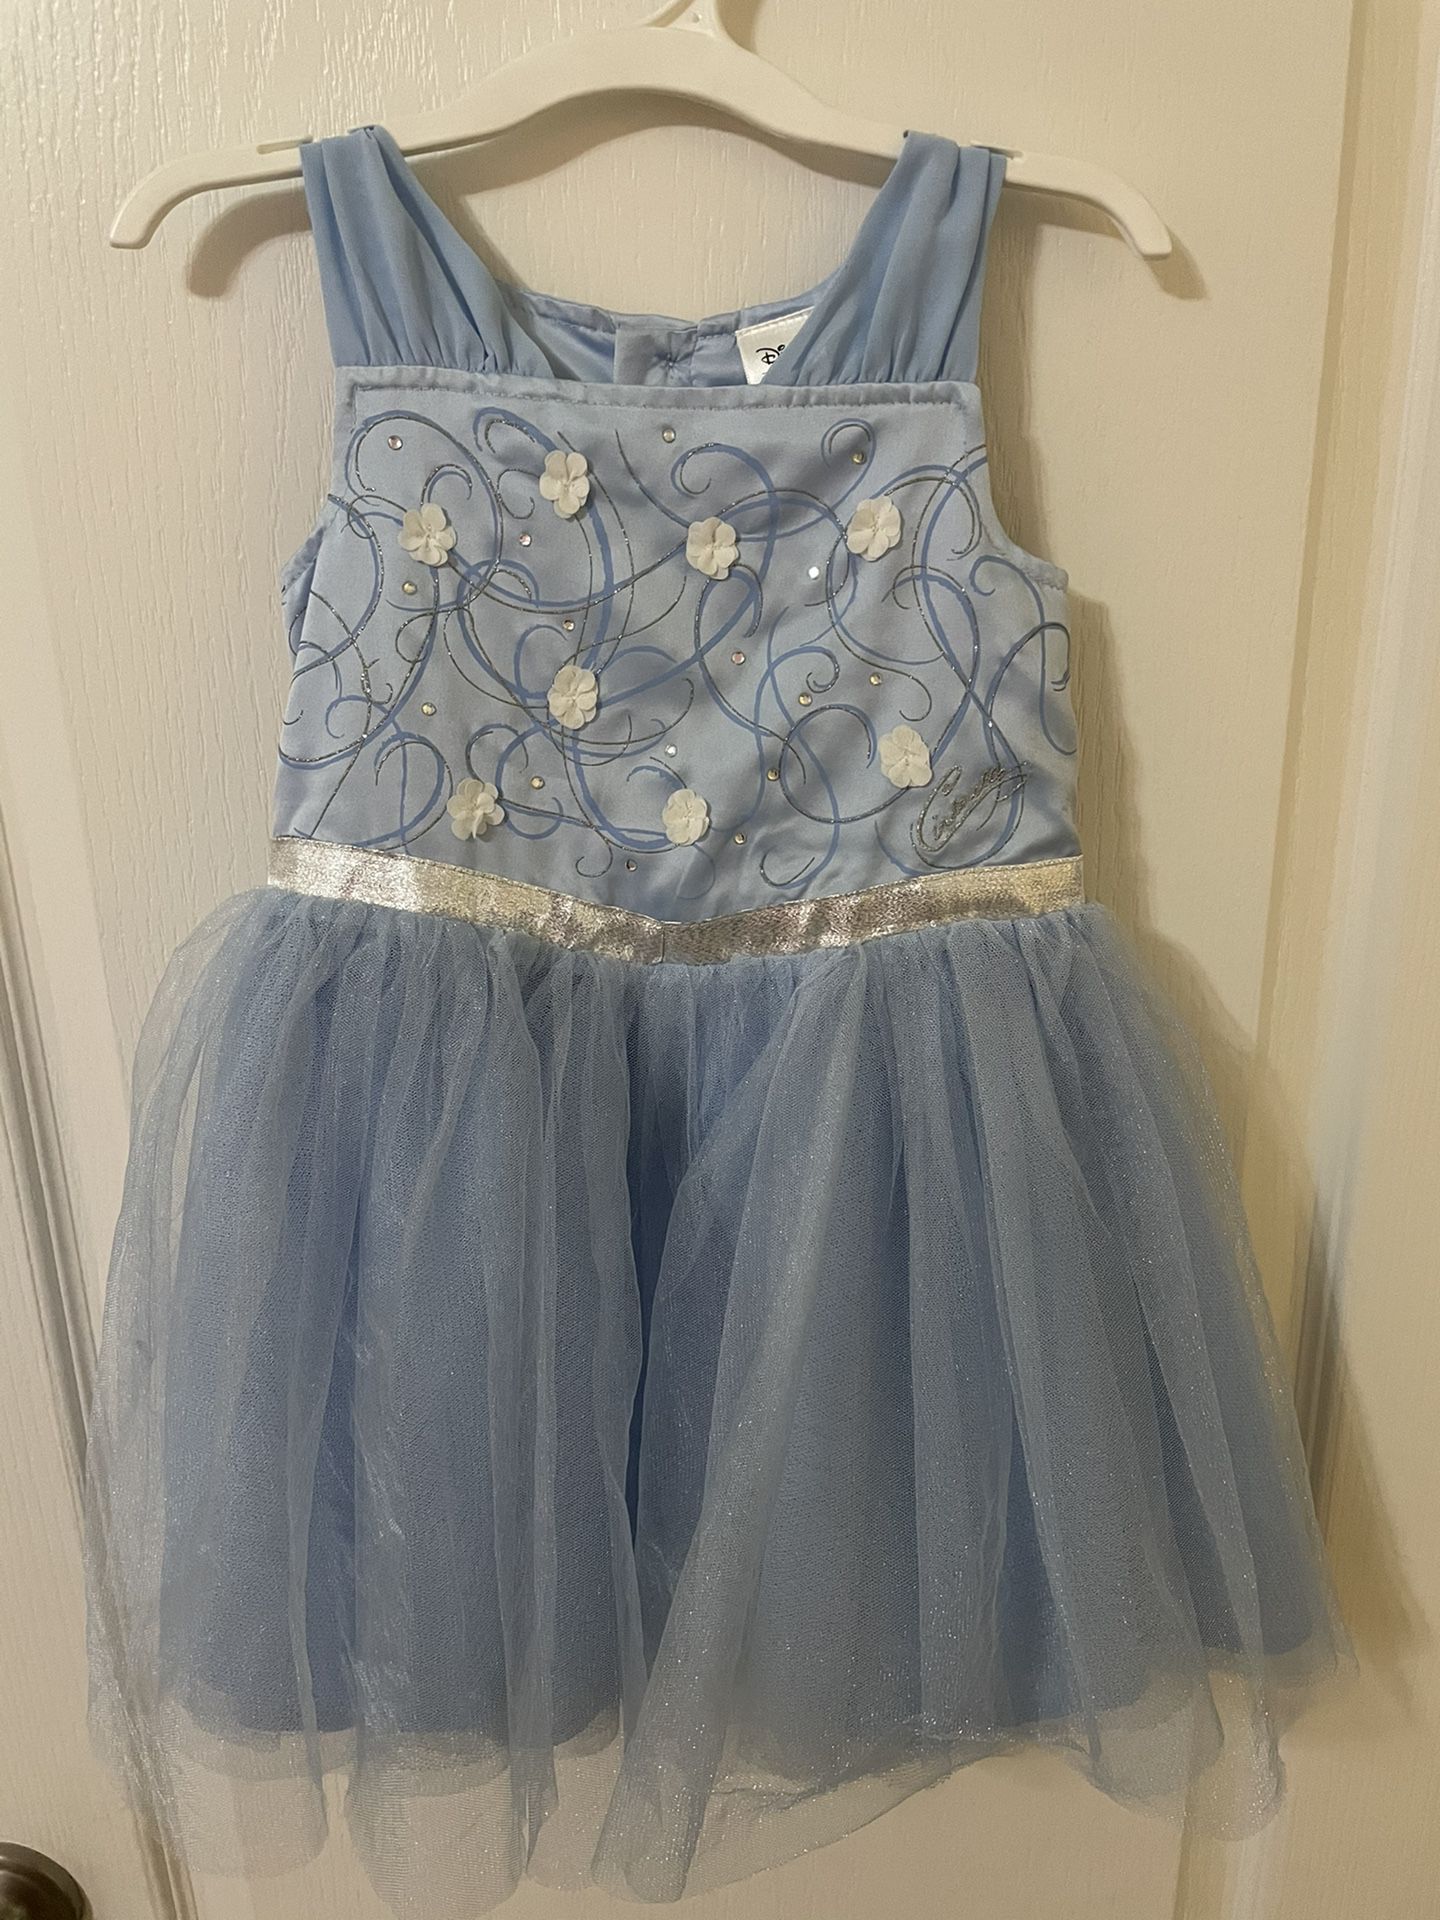 Cinderella Dress (size 3T)